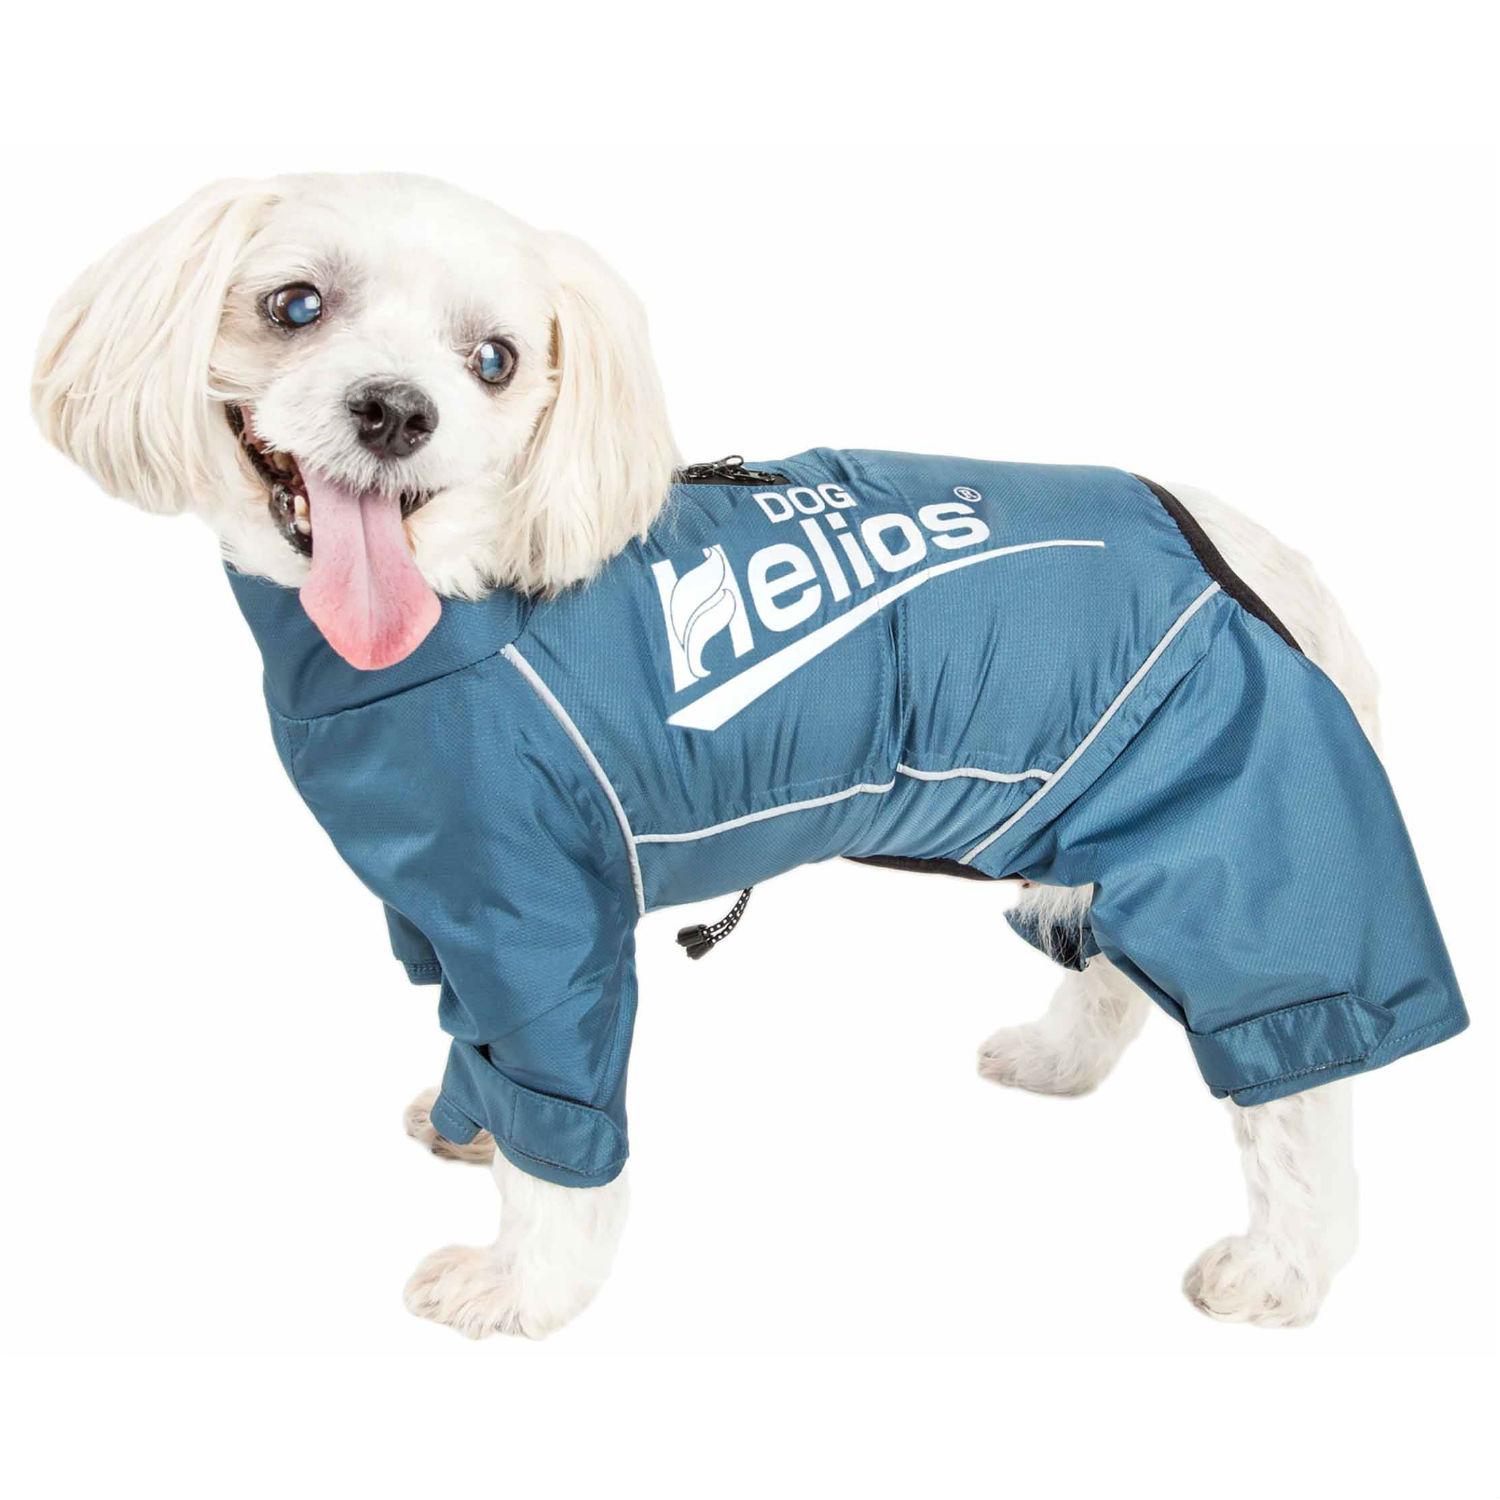 Pet Life Helios Hurricanine Full Body Dog Coat w/ Heat Reflective Technology - Blue